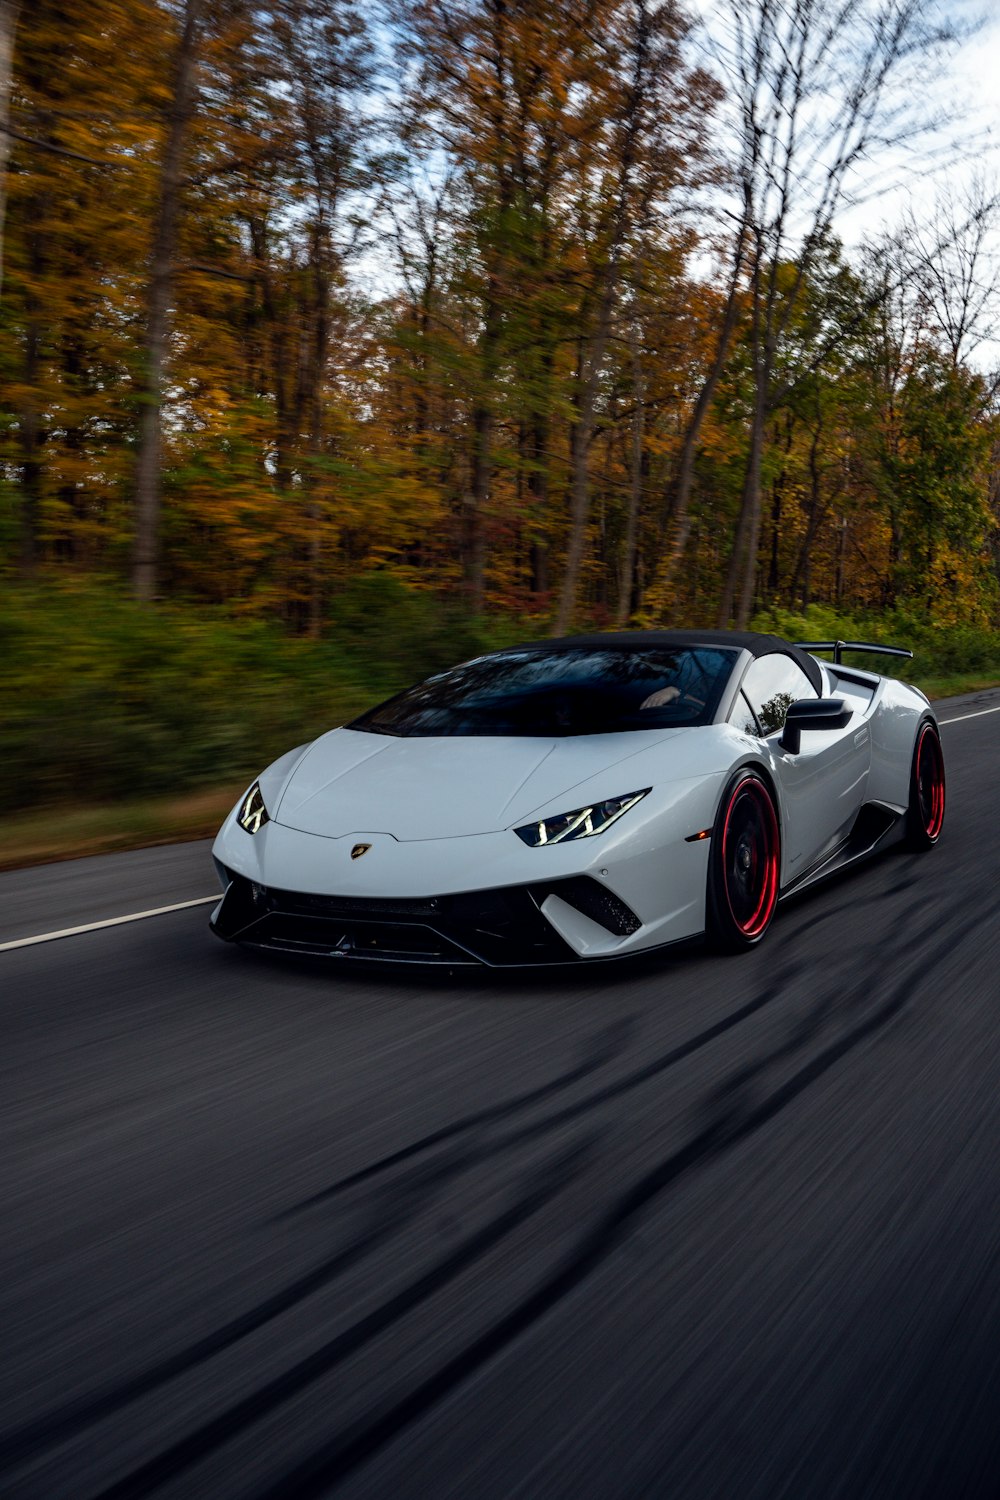 100+ Lamborghini Pictures | Download Free Images on Unsplash